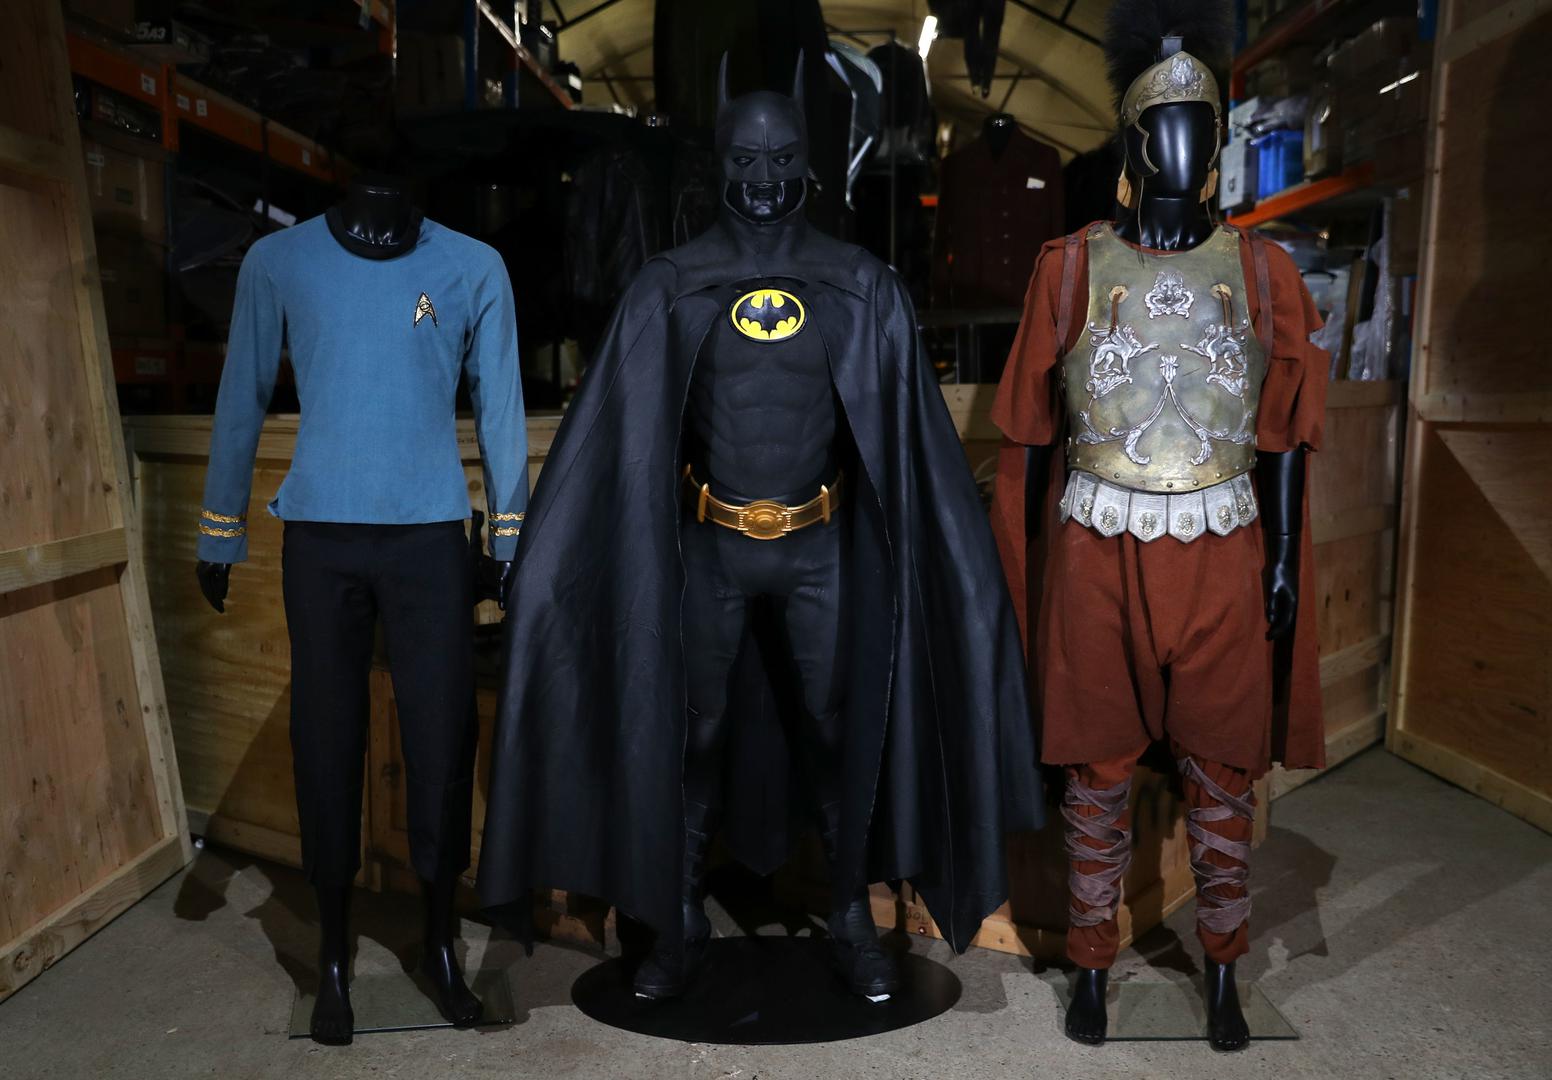 Uniforma vulkanca Spocka iz TV serije "Star Trek", Batman odijelo Michaela Keatona i gladijatorski oklop Russella Crowea